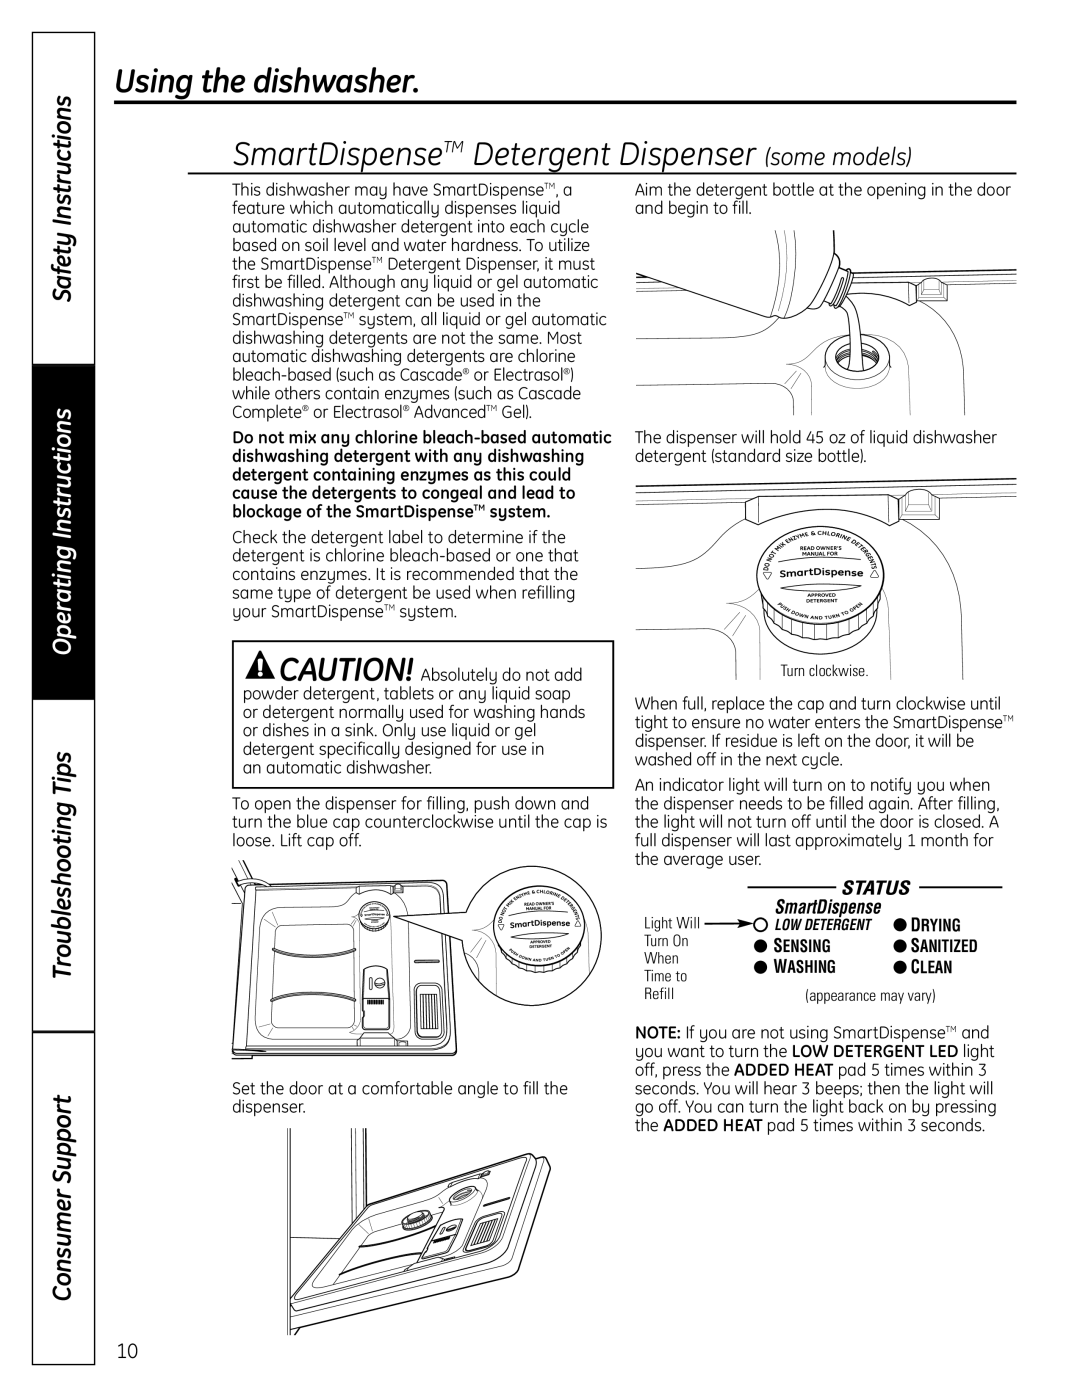 GE 165D4700P381 SmartDispenseTM Detergent Dispenser some models, Using the dishwasher, Instructions, Safety, Drying, Clean 